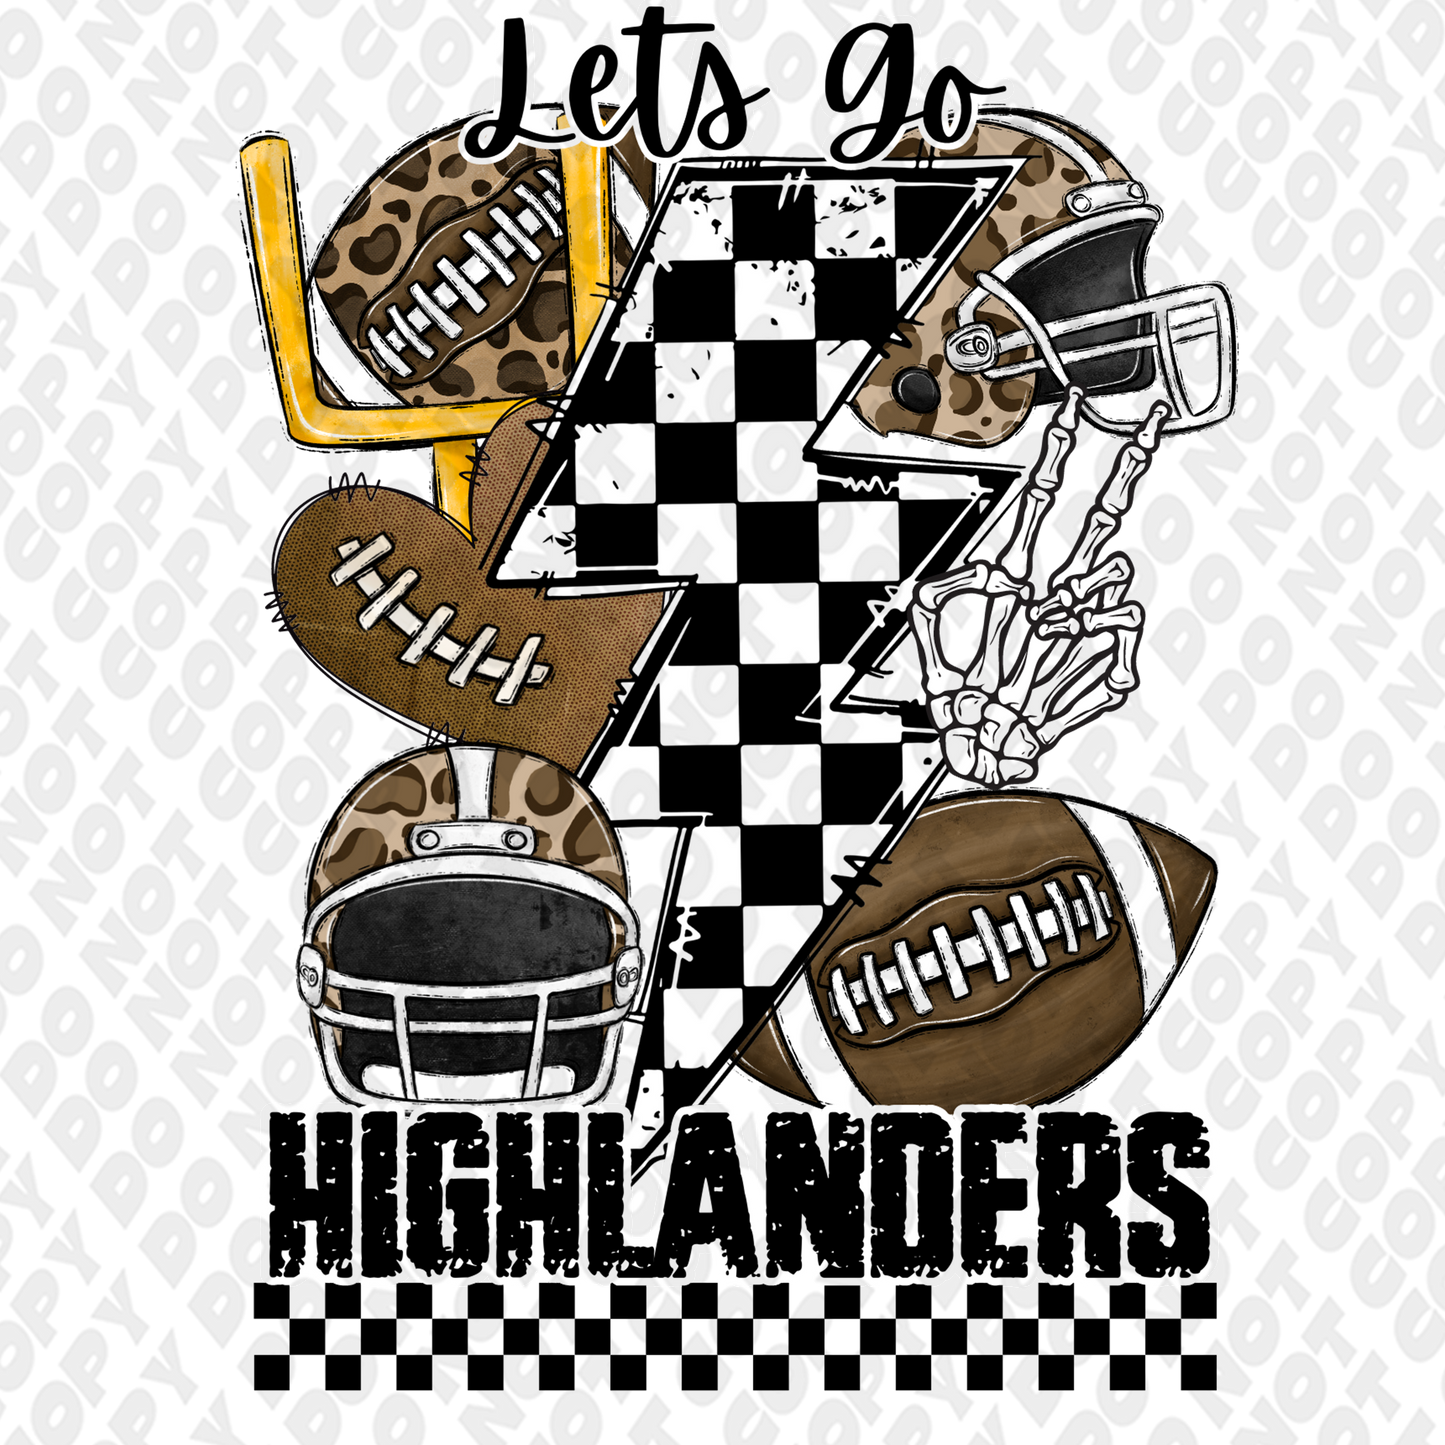 Let's go Highlanders